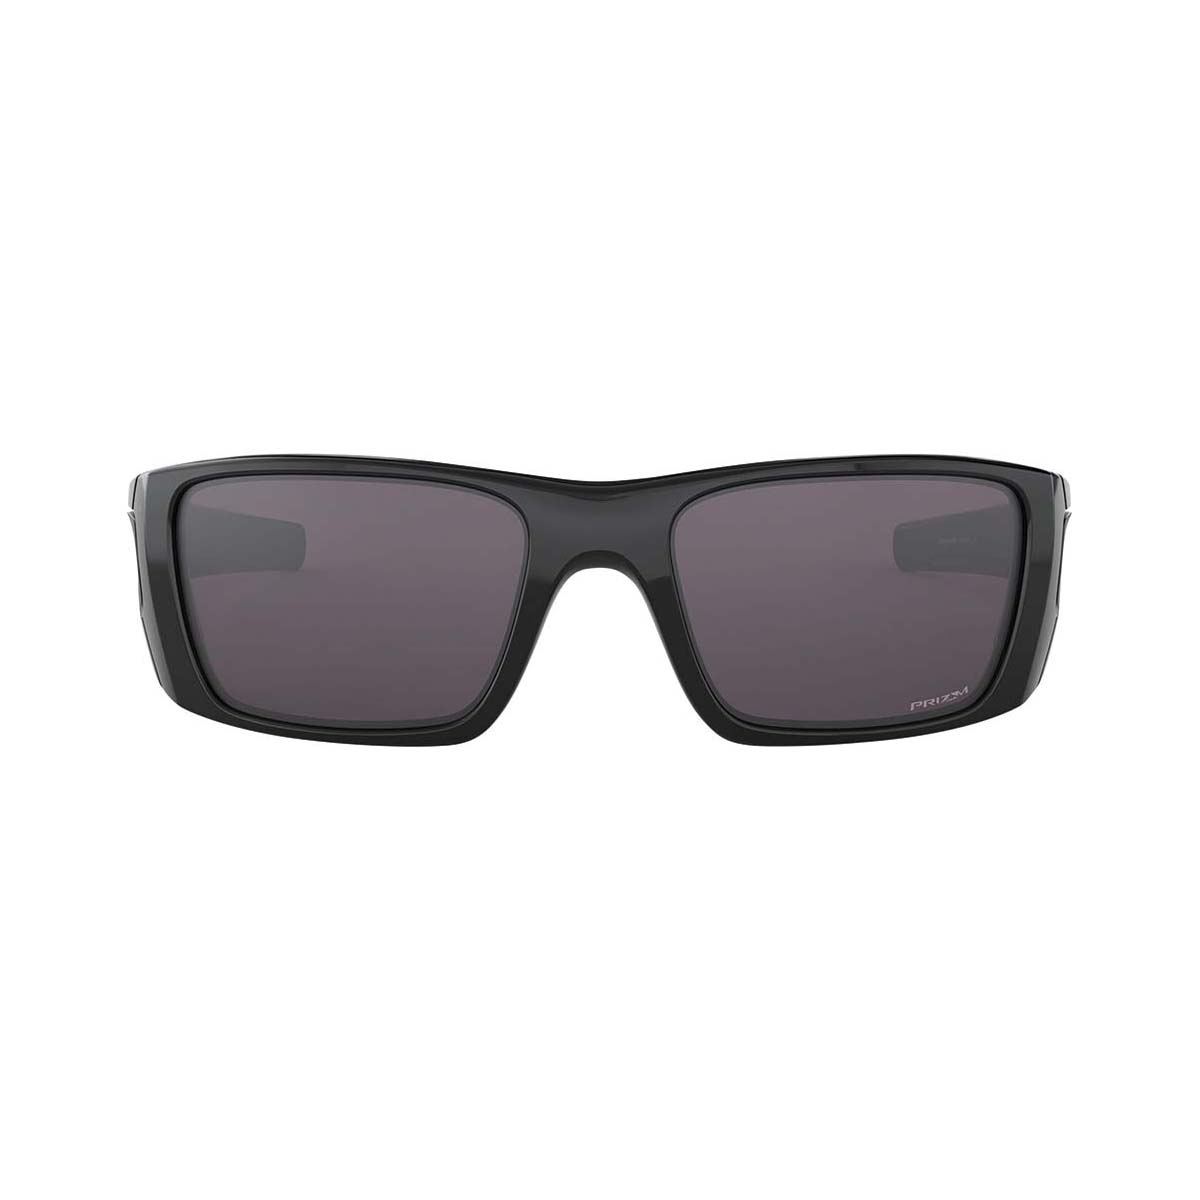 Oakley Fuell Cell PRIZM Sunglasses